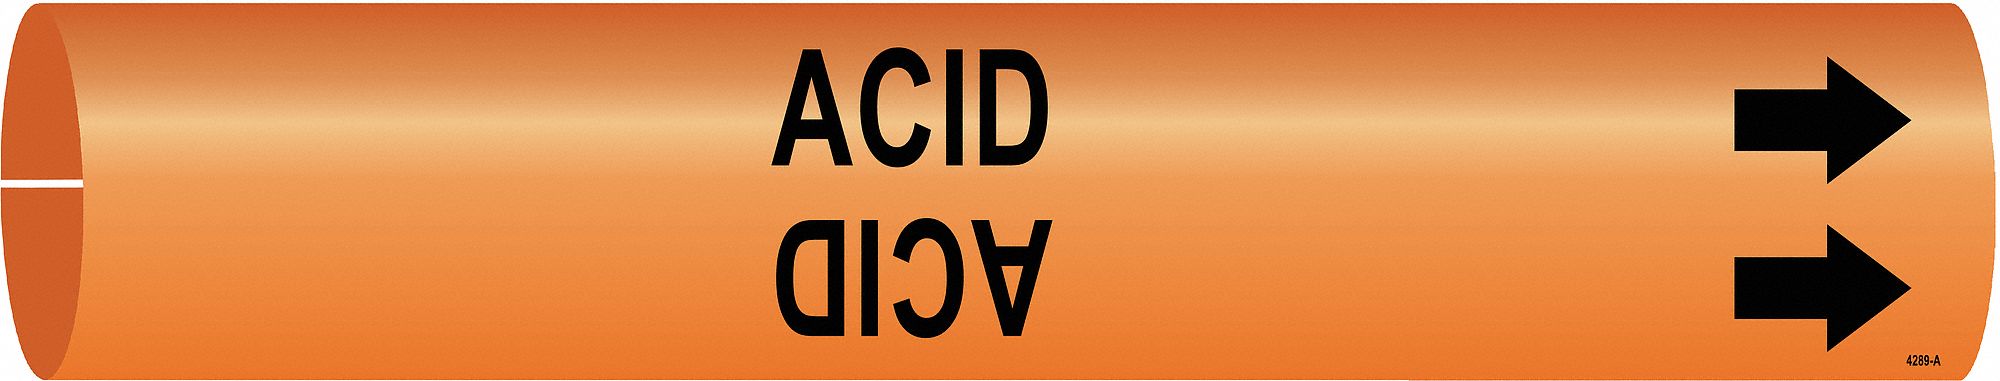 Legend Acid Legend Acid Brady 4289-A Black on Orange Snap-On Pipe Marker